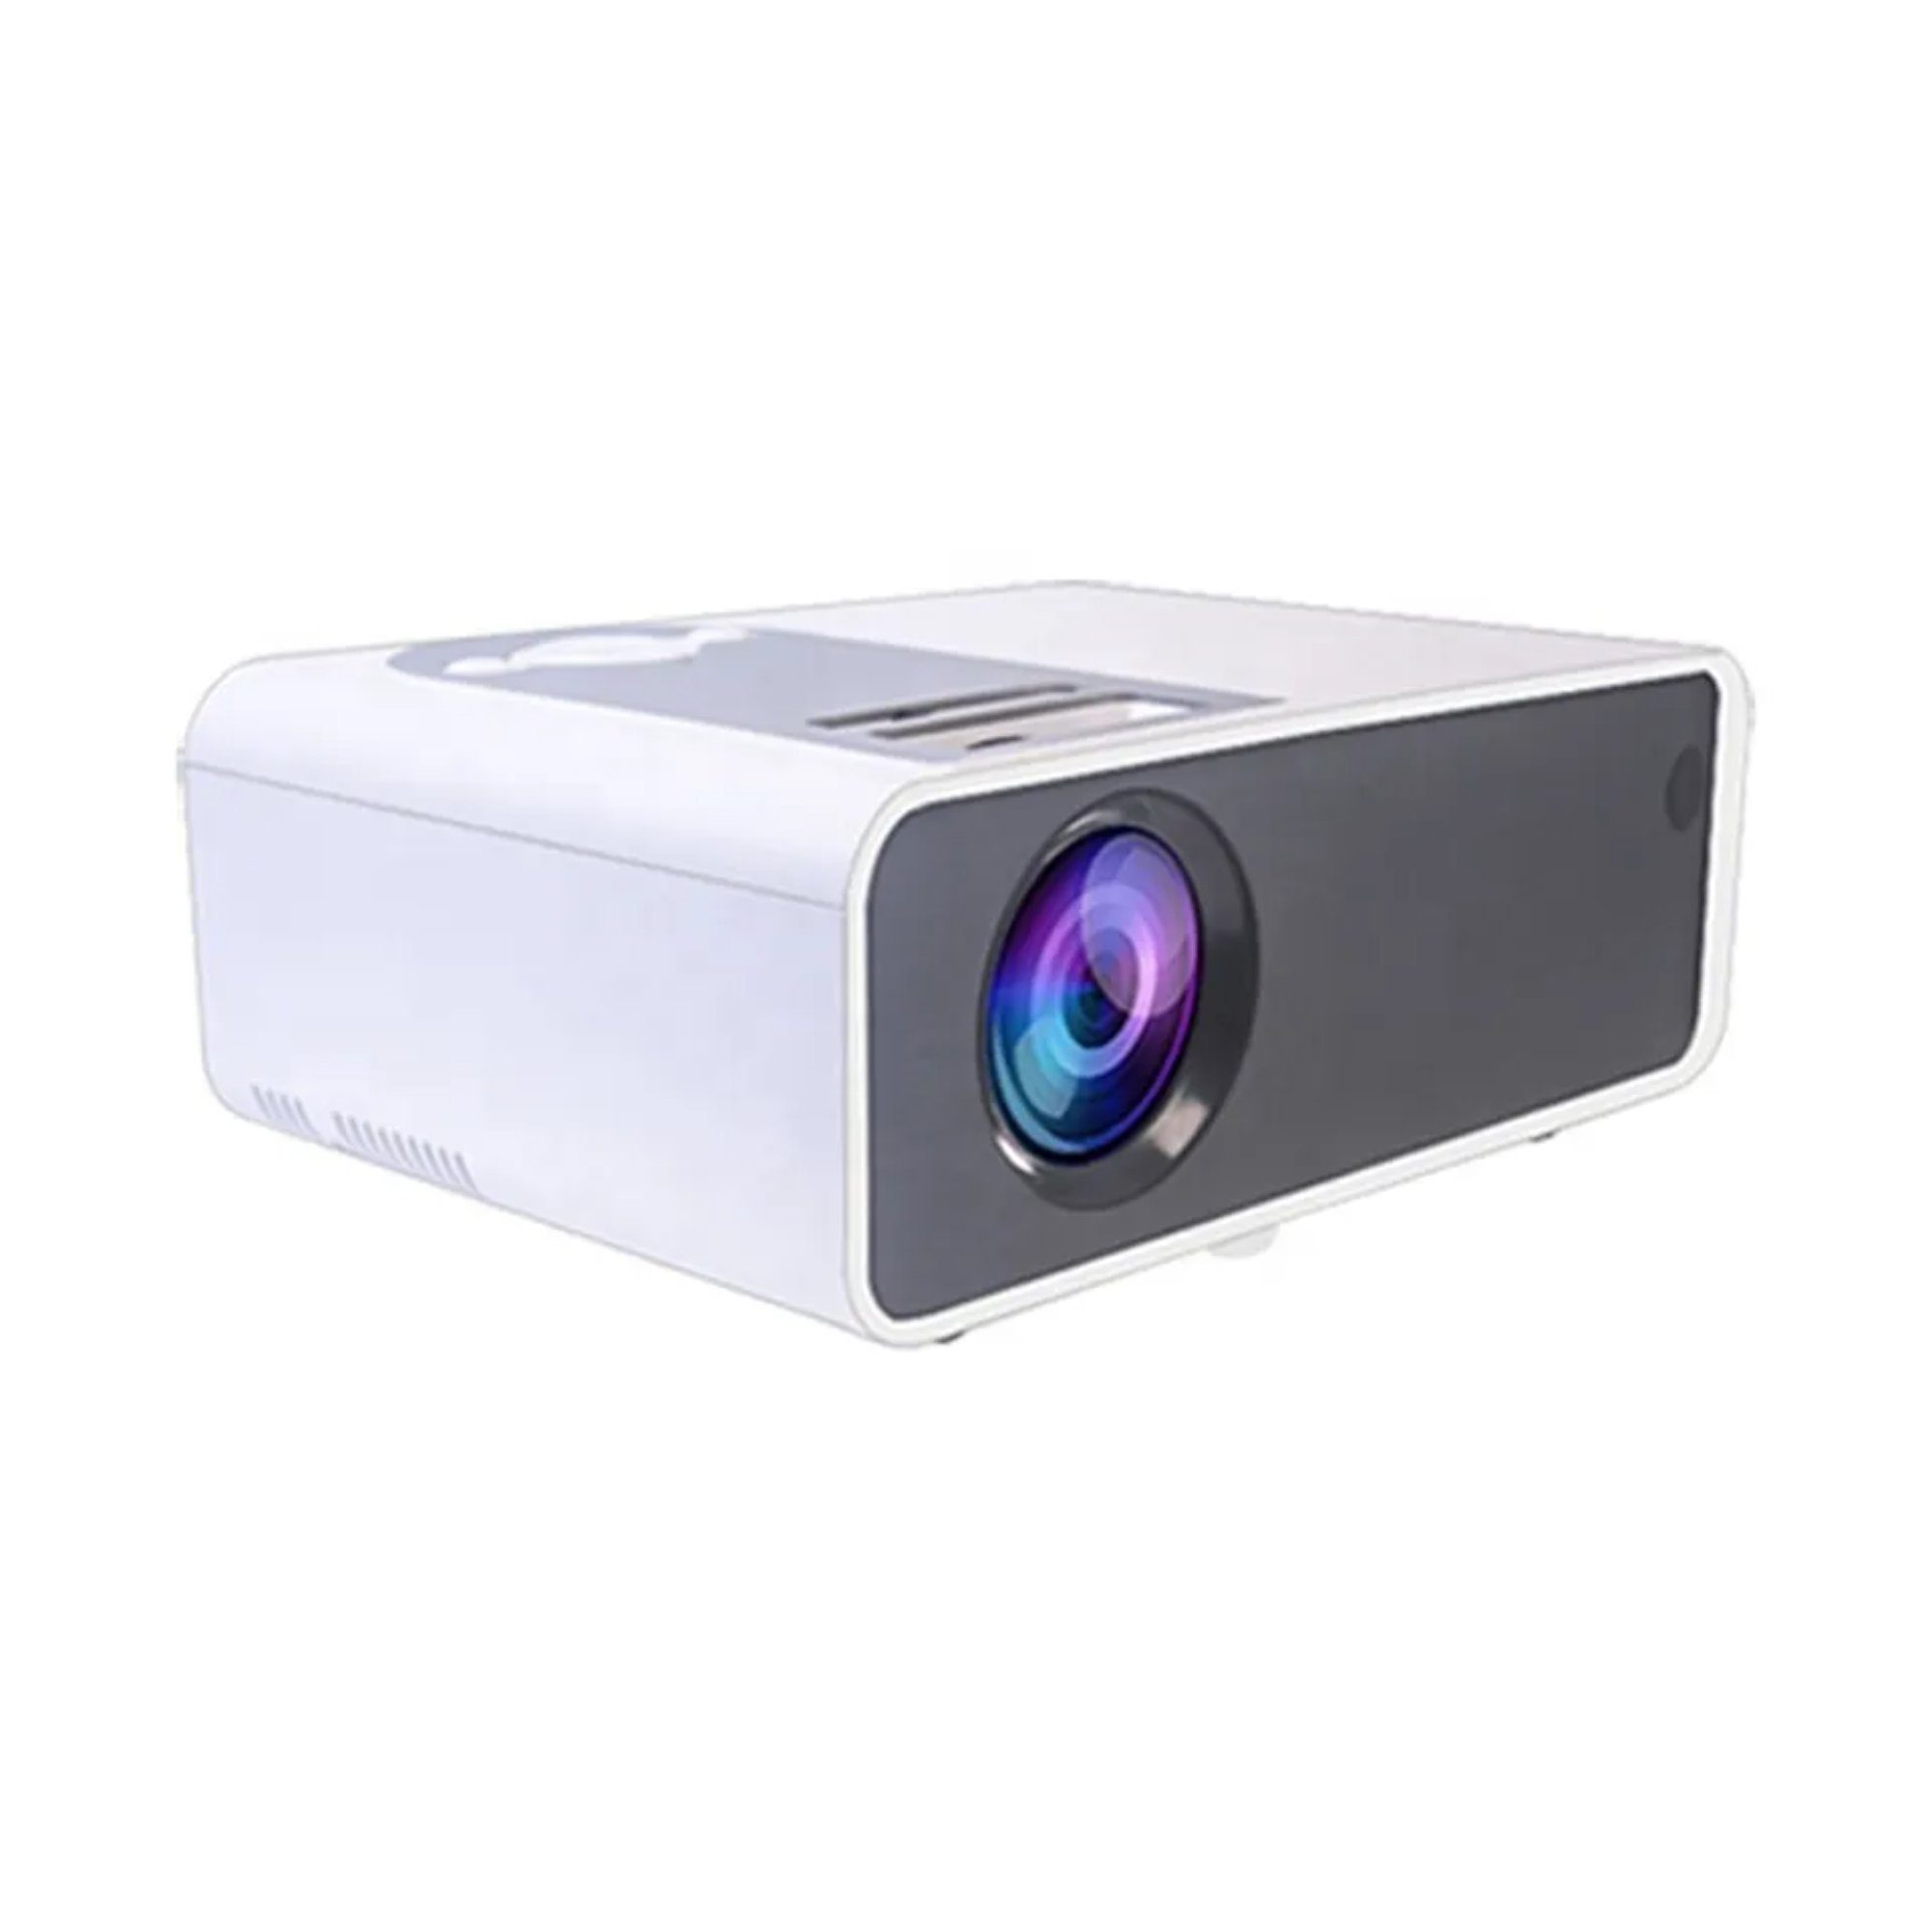 TransJee LED-Projektor Full HD 1080p Heimgebrauch Android Movie Led-Projektor LED-Beamer (2000:1, 1280*720 px, Eingebaute Lautsprecher, LCD+LED, Objektiv mit manuellem Fokus)